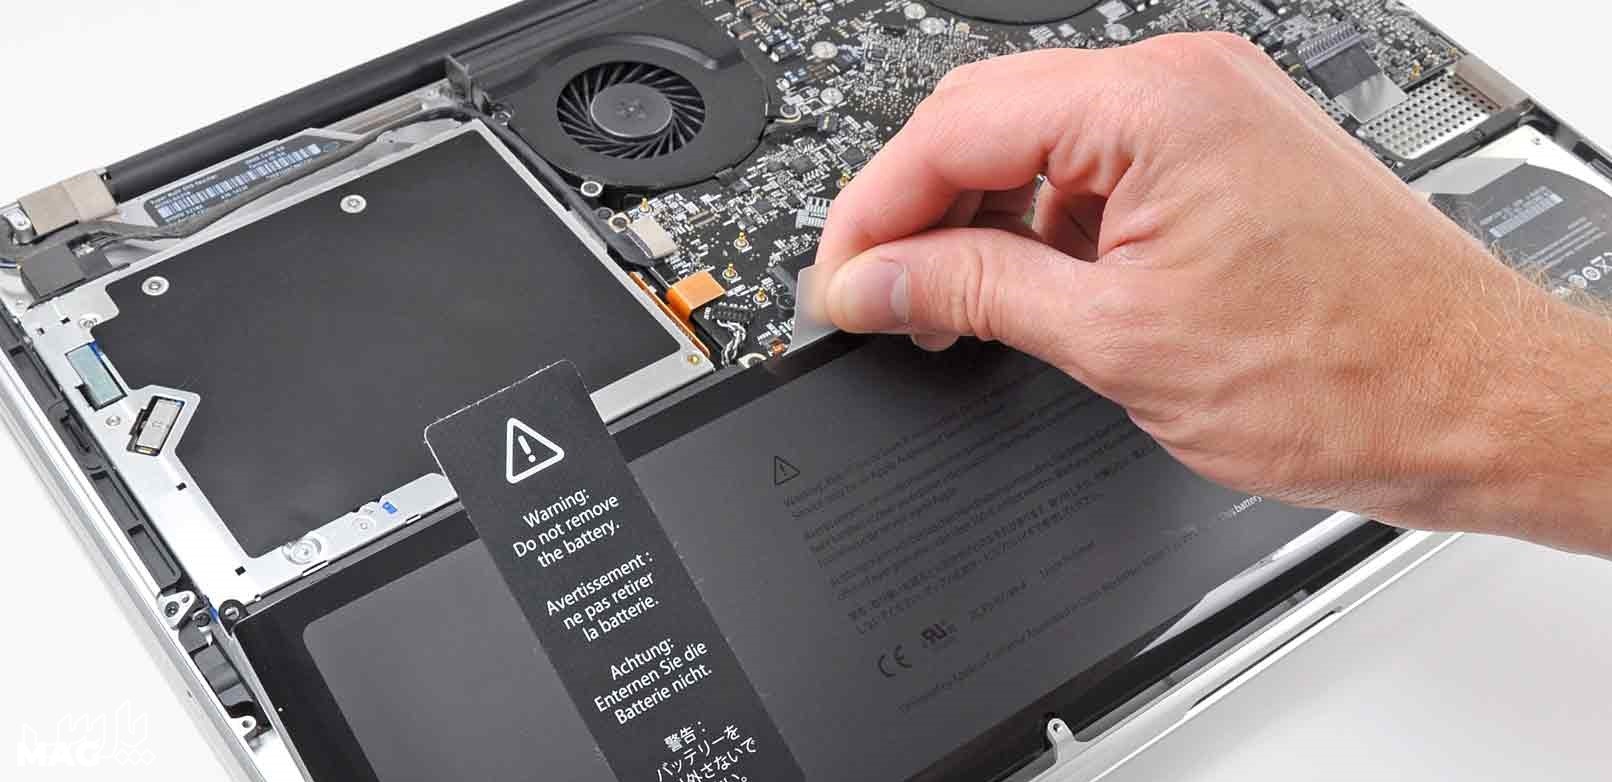 عوض کردن باتری لپ تاپ - رفع مشکل شارژ نشدن لپ تاپ